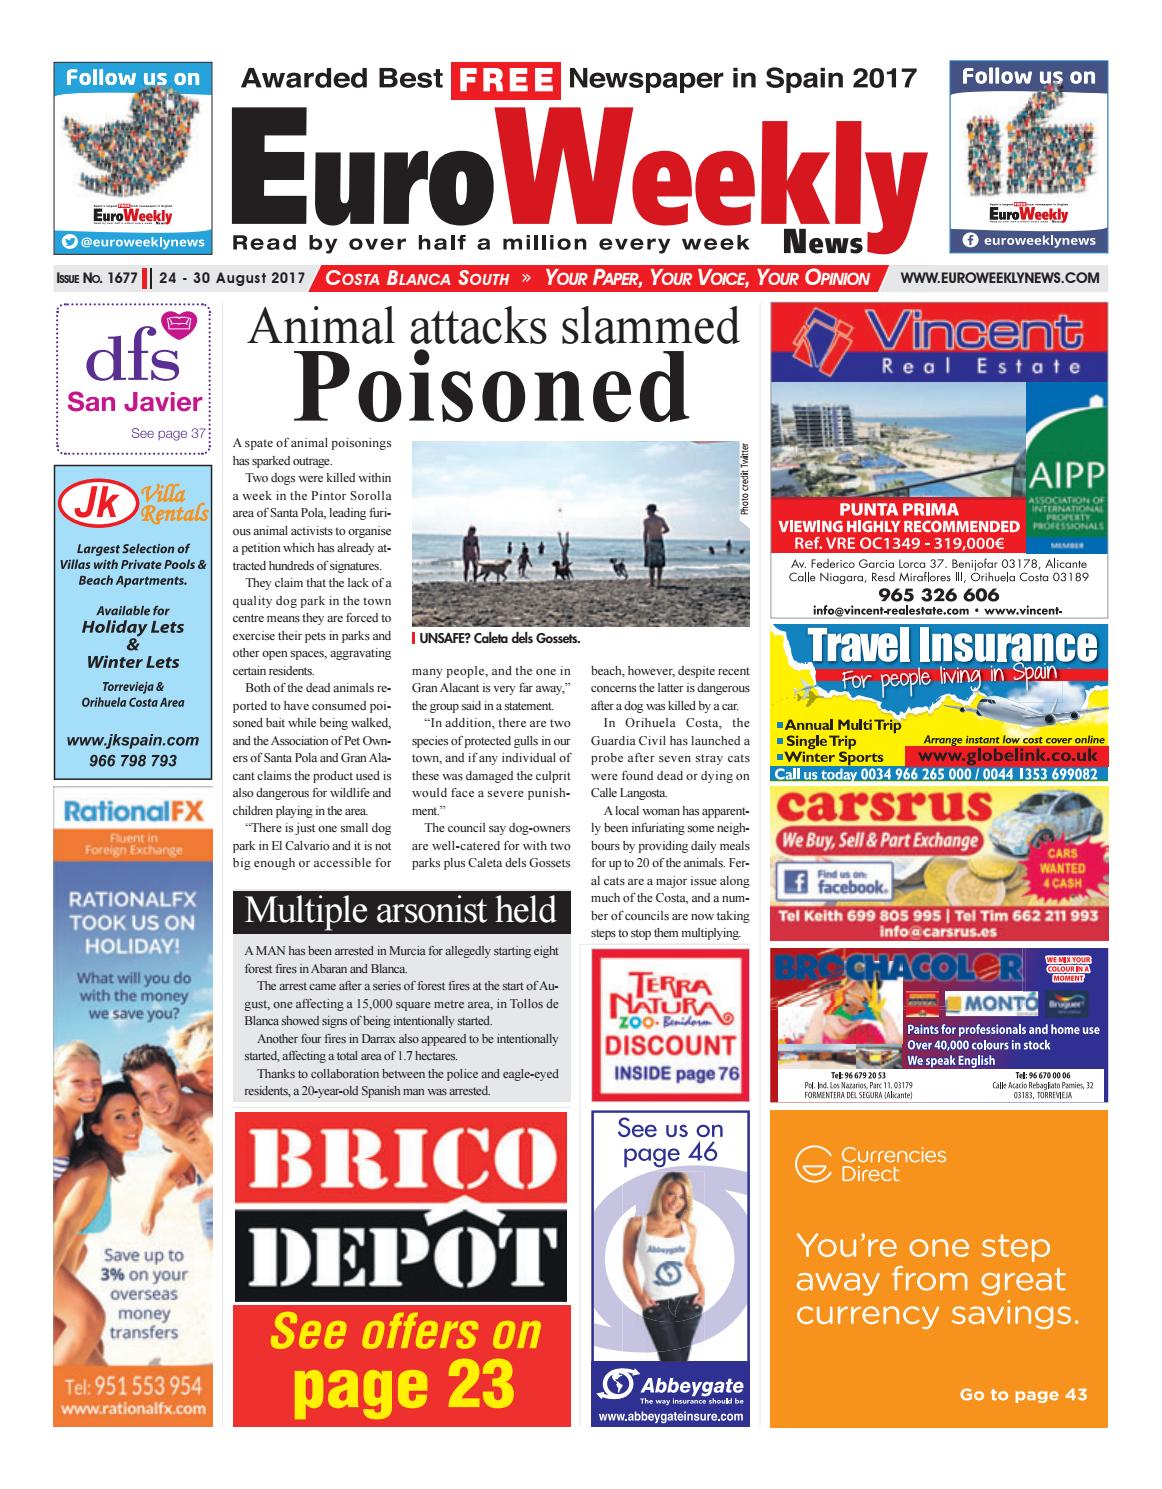 Bricodepot Paris Charmant Euro Weekly News Costa Blanca south 24 – 30 August 2017